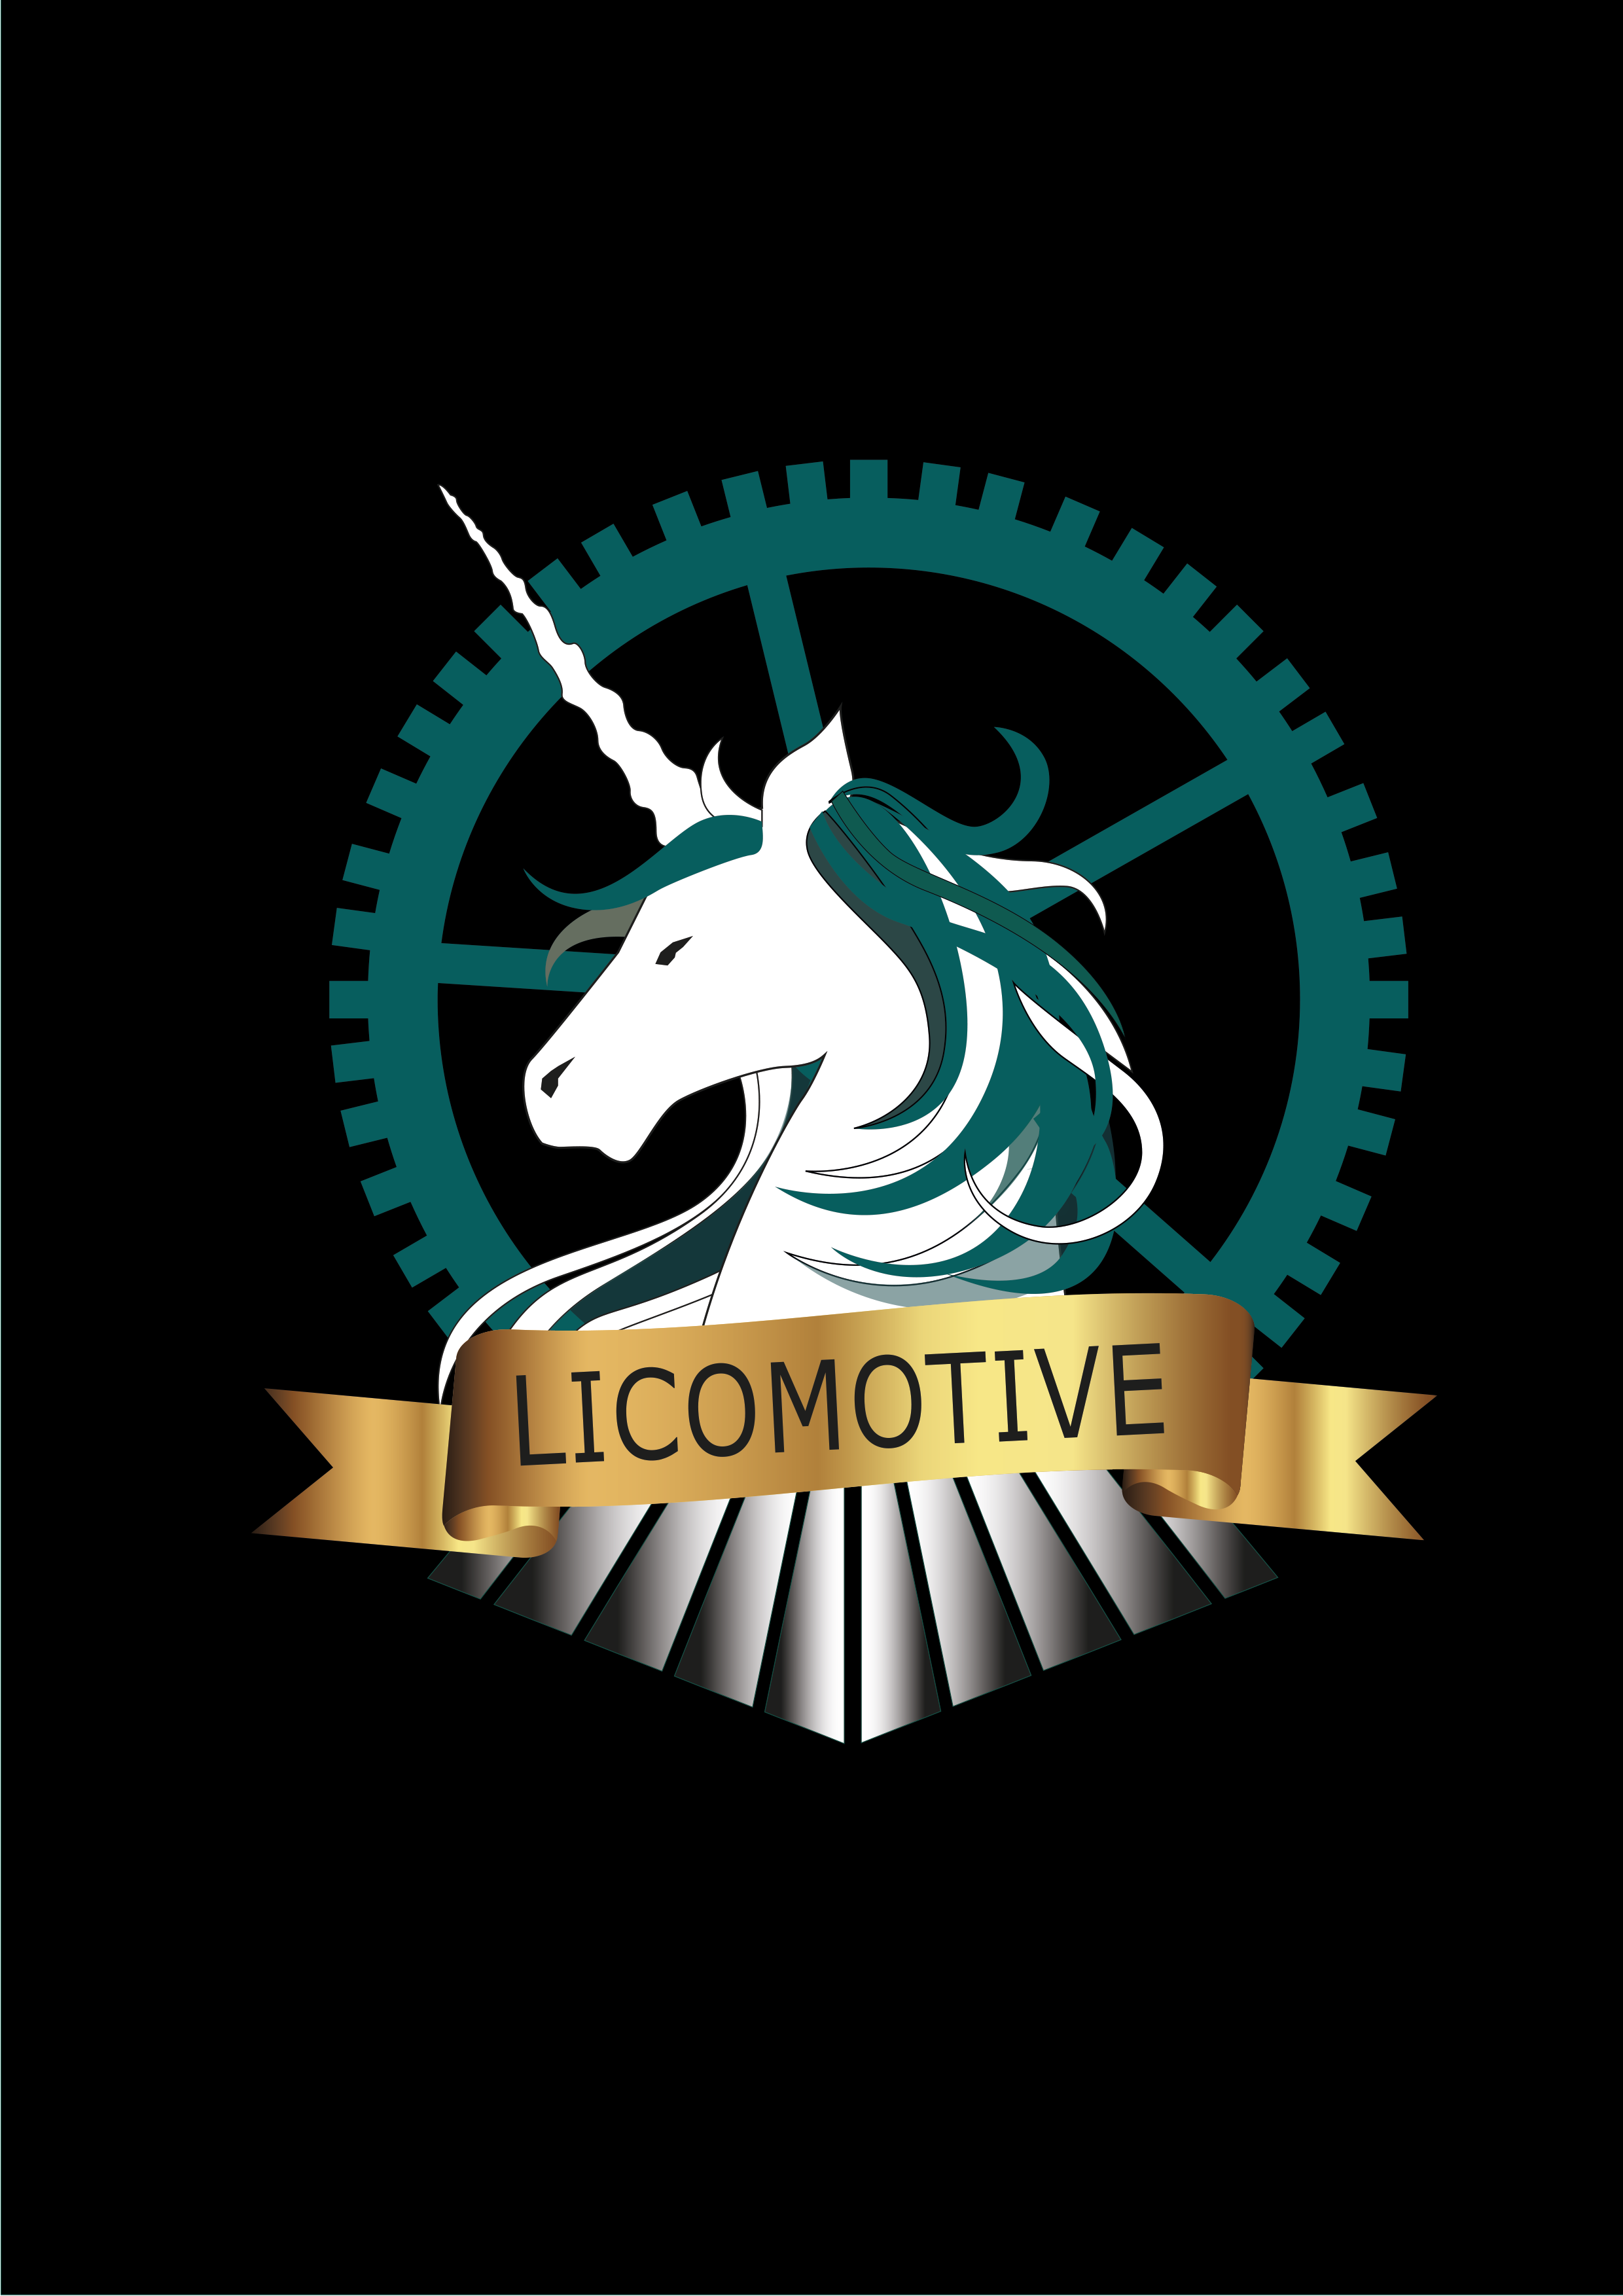 Logo licomotive . notre licorne est notre image de marque